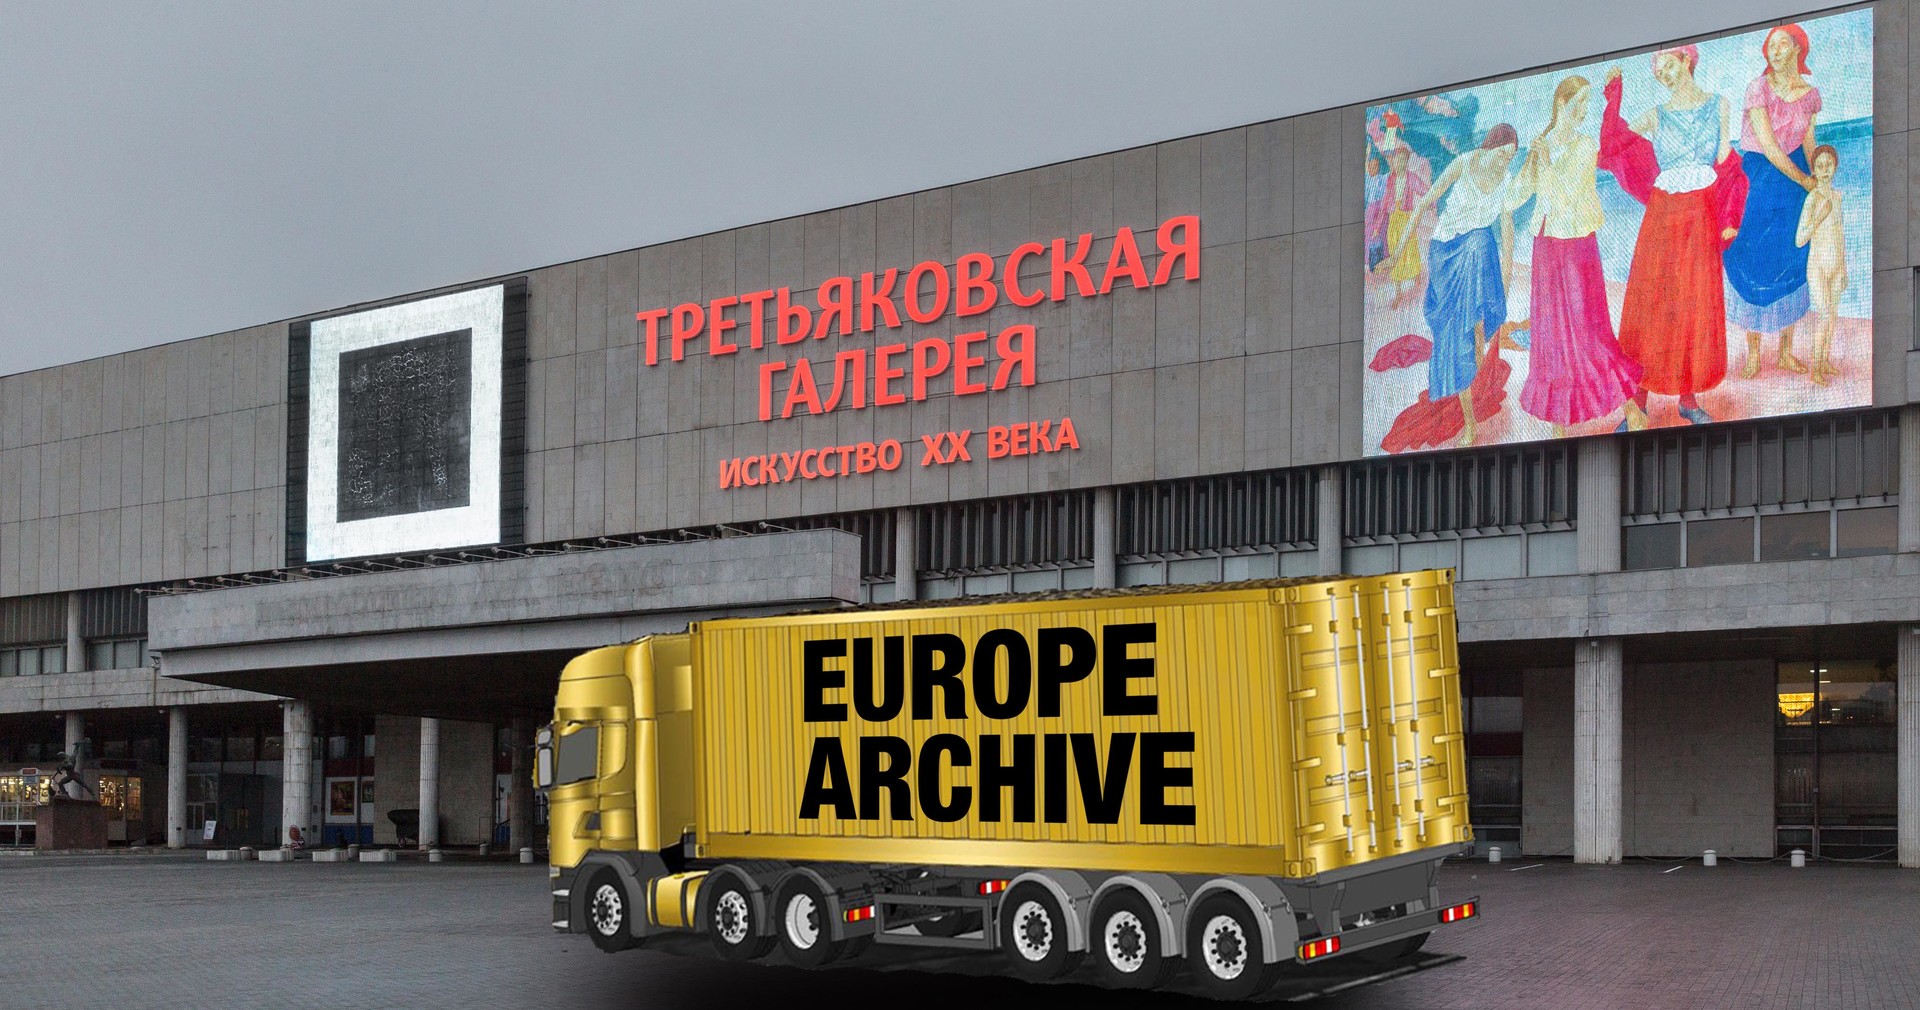 Erik Kessels & Thomas Mailaender, Europe Archive, 2020
